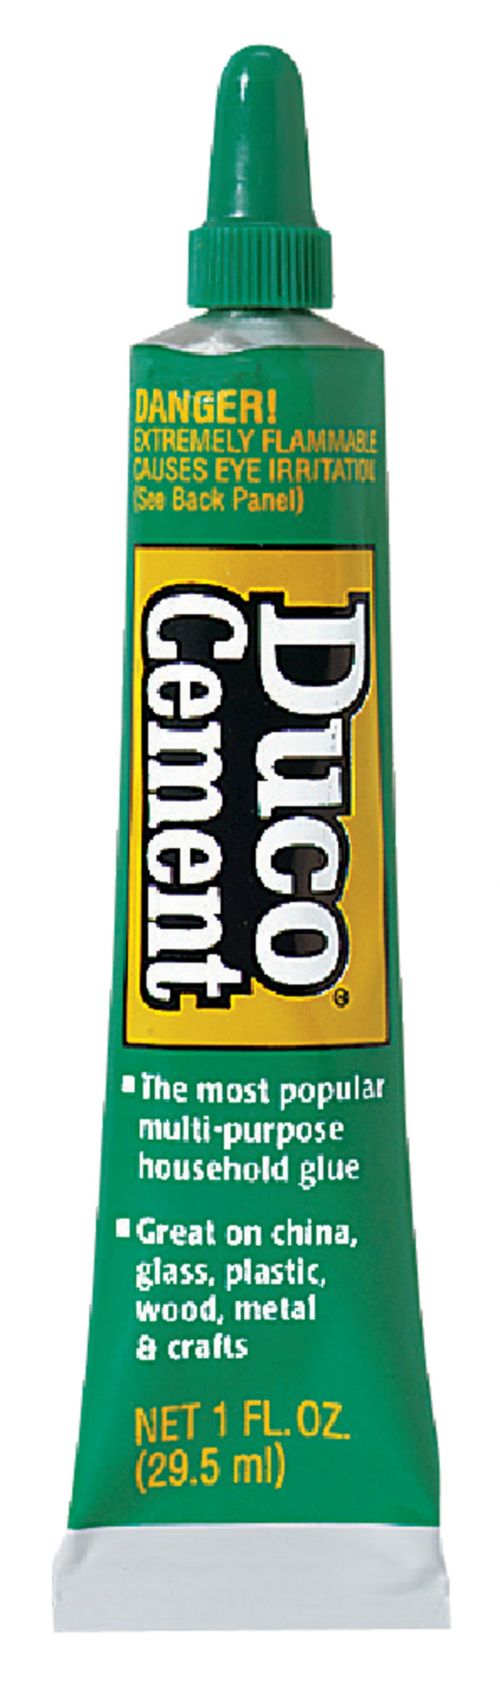  Devcon 90225 Duco Plastic and Model Cement - 0.5 oz